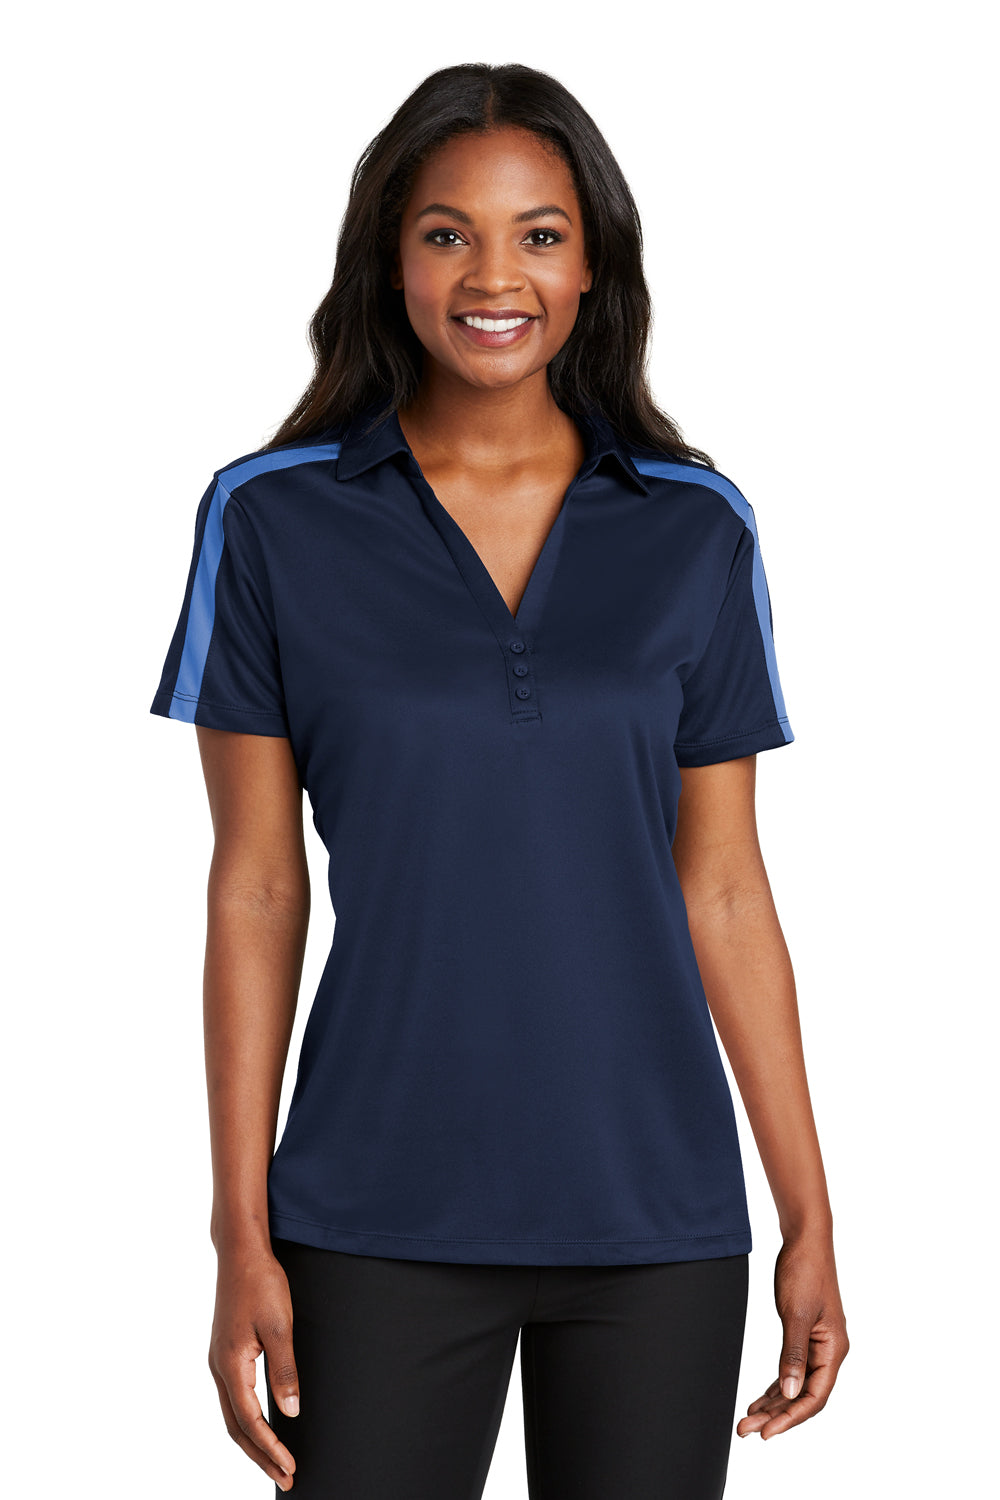 Port Authority L547 Womens Silk Touch Performance Moisture Wicking Short Sleeve Polo Shirt Navy Blue/Carolina Blue Front